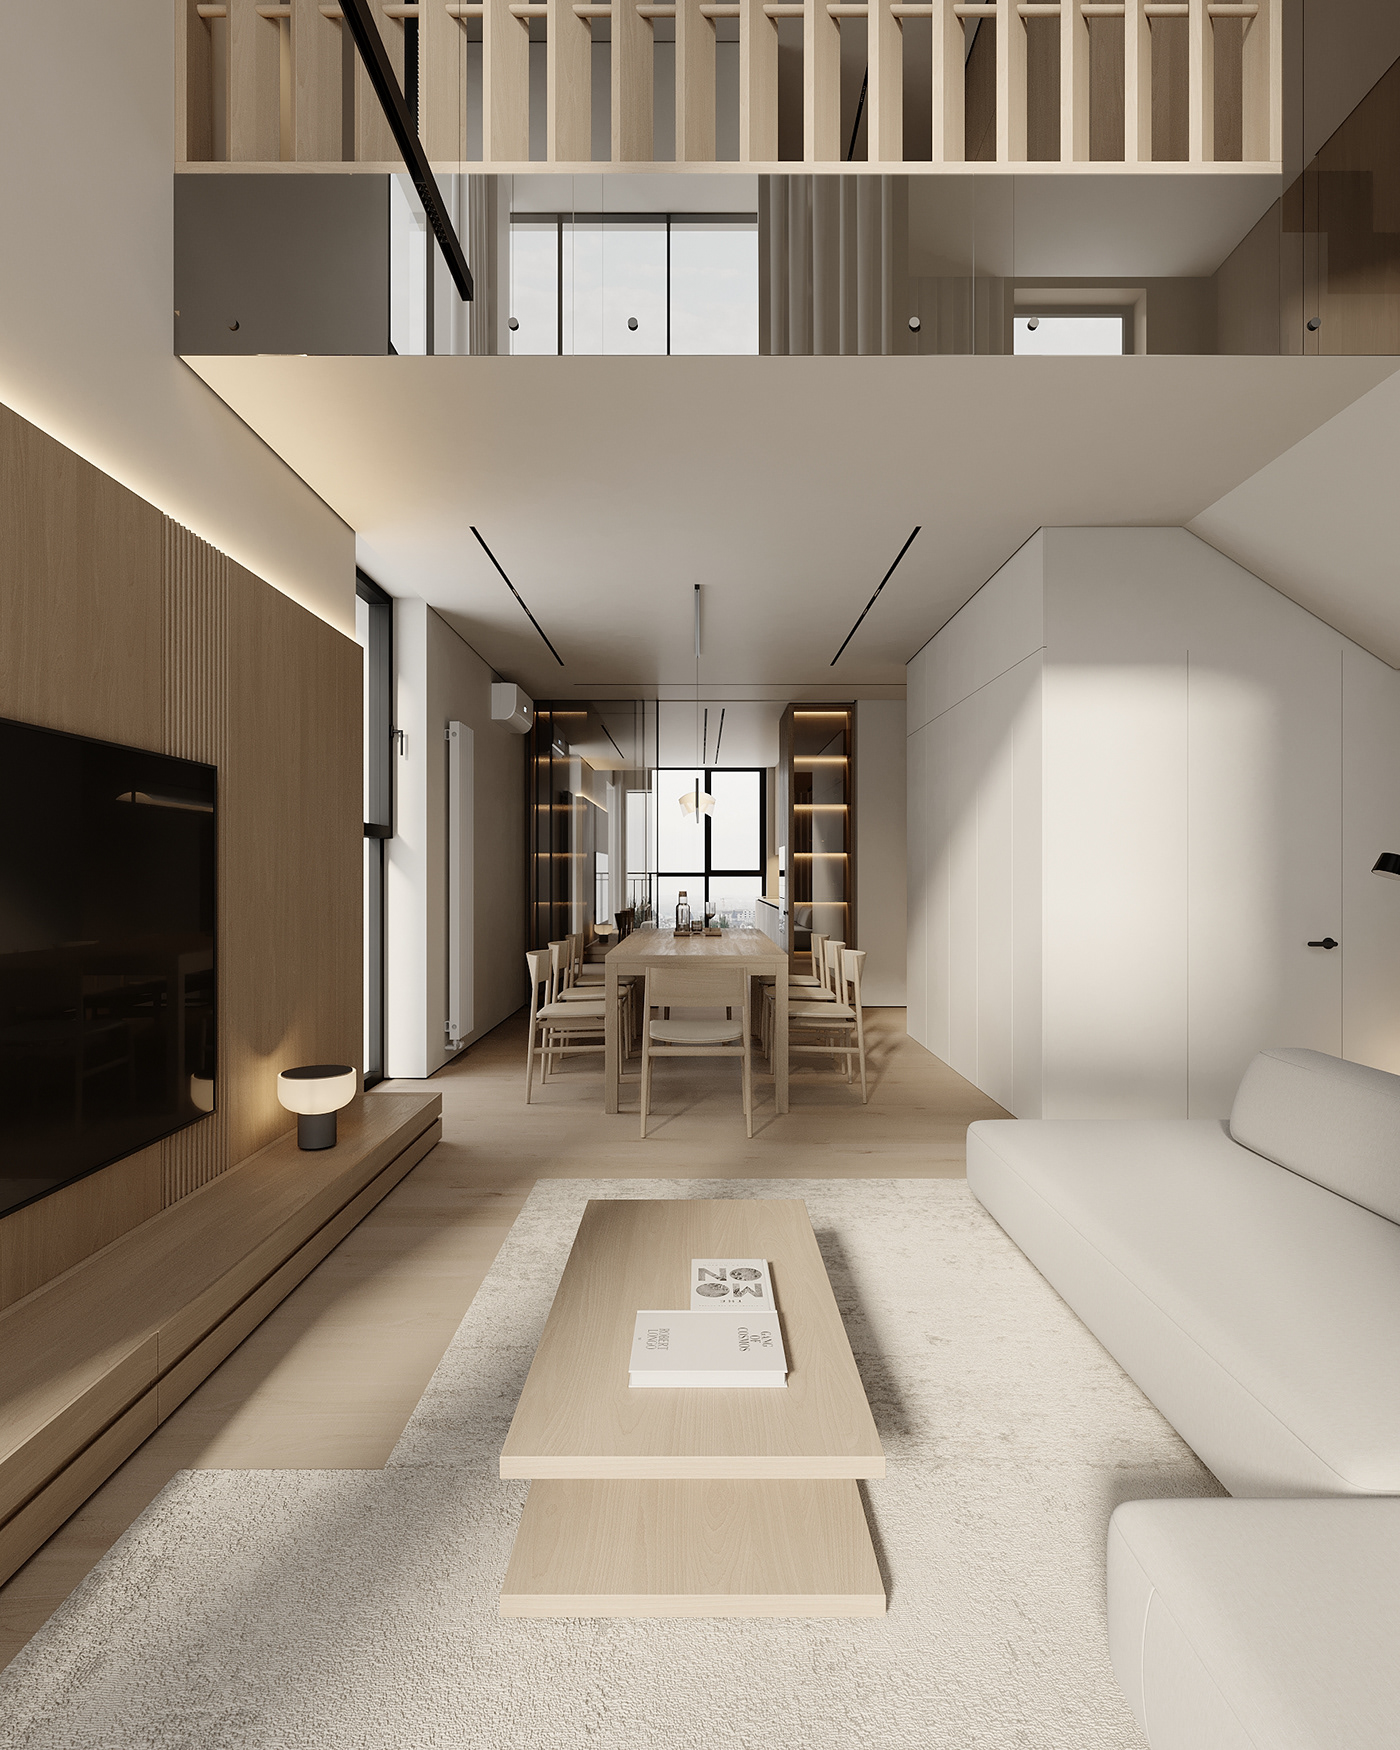 3ds max corona render  interior design  visualization living room kitchen Interior